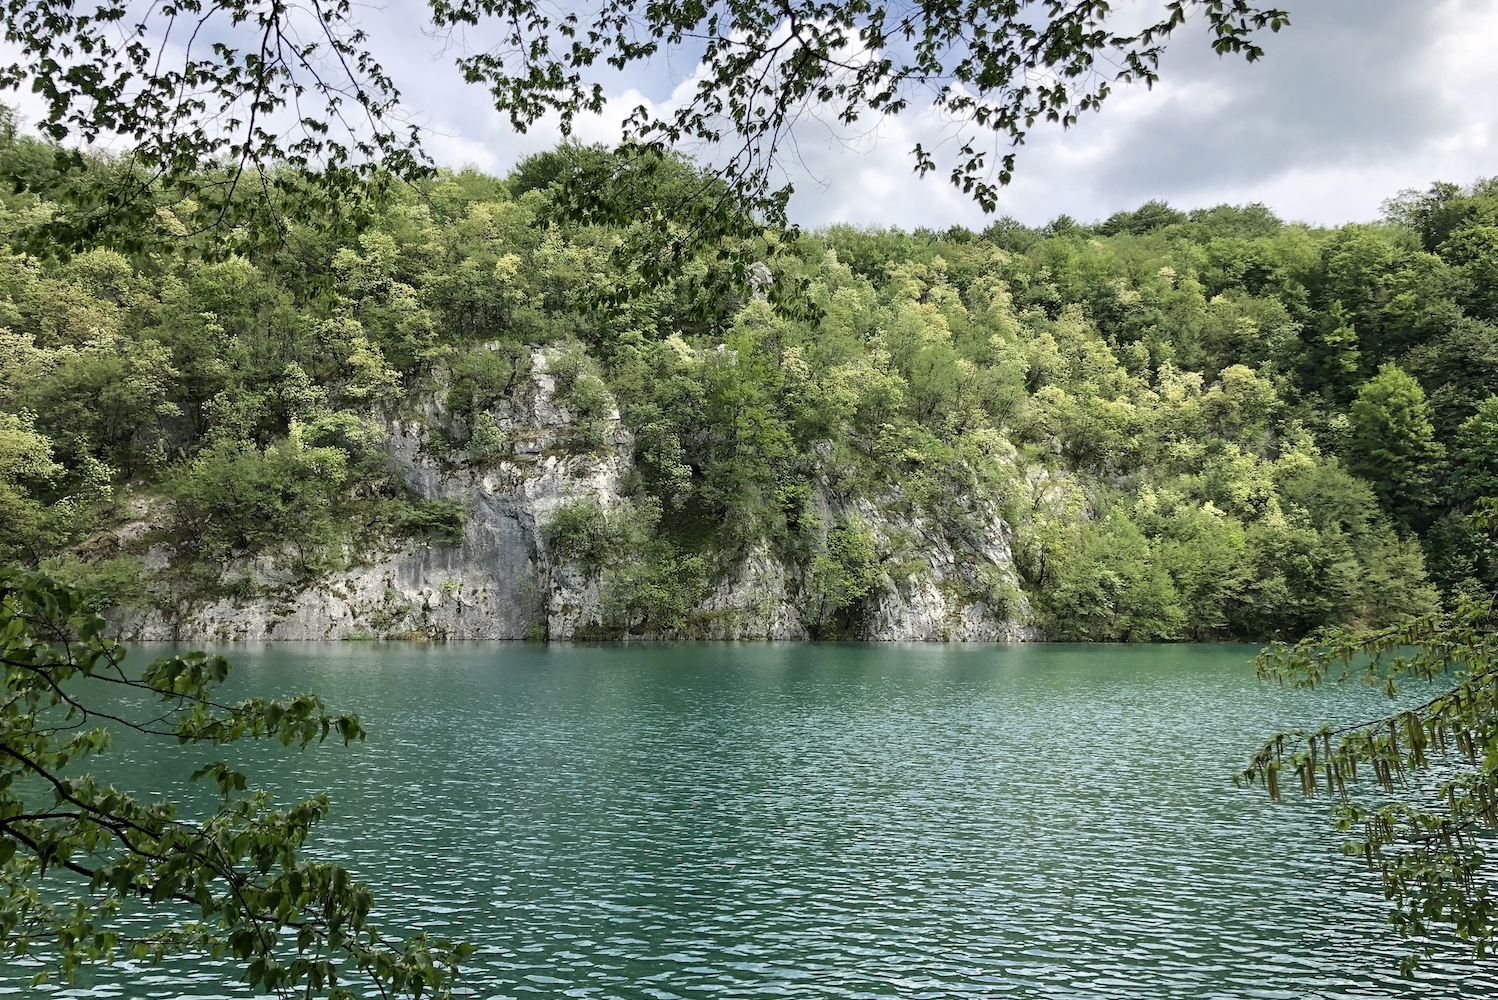 Plitvice Lakes. Image: Patrick Müller under a CC license